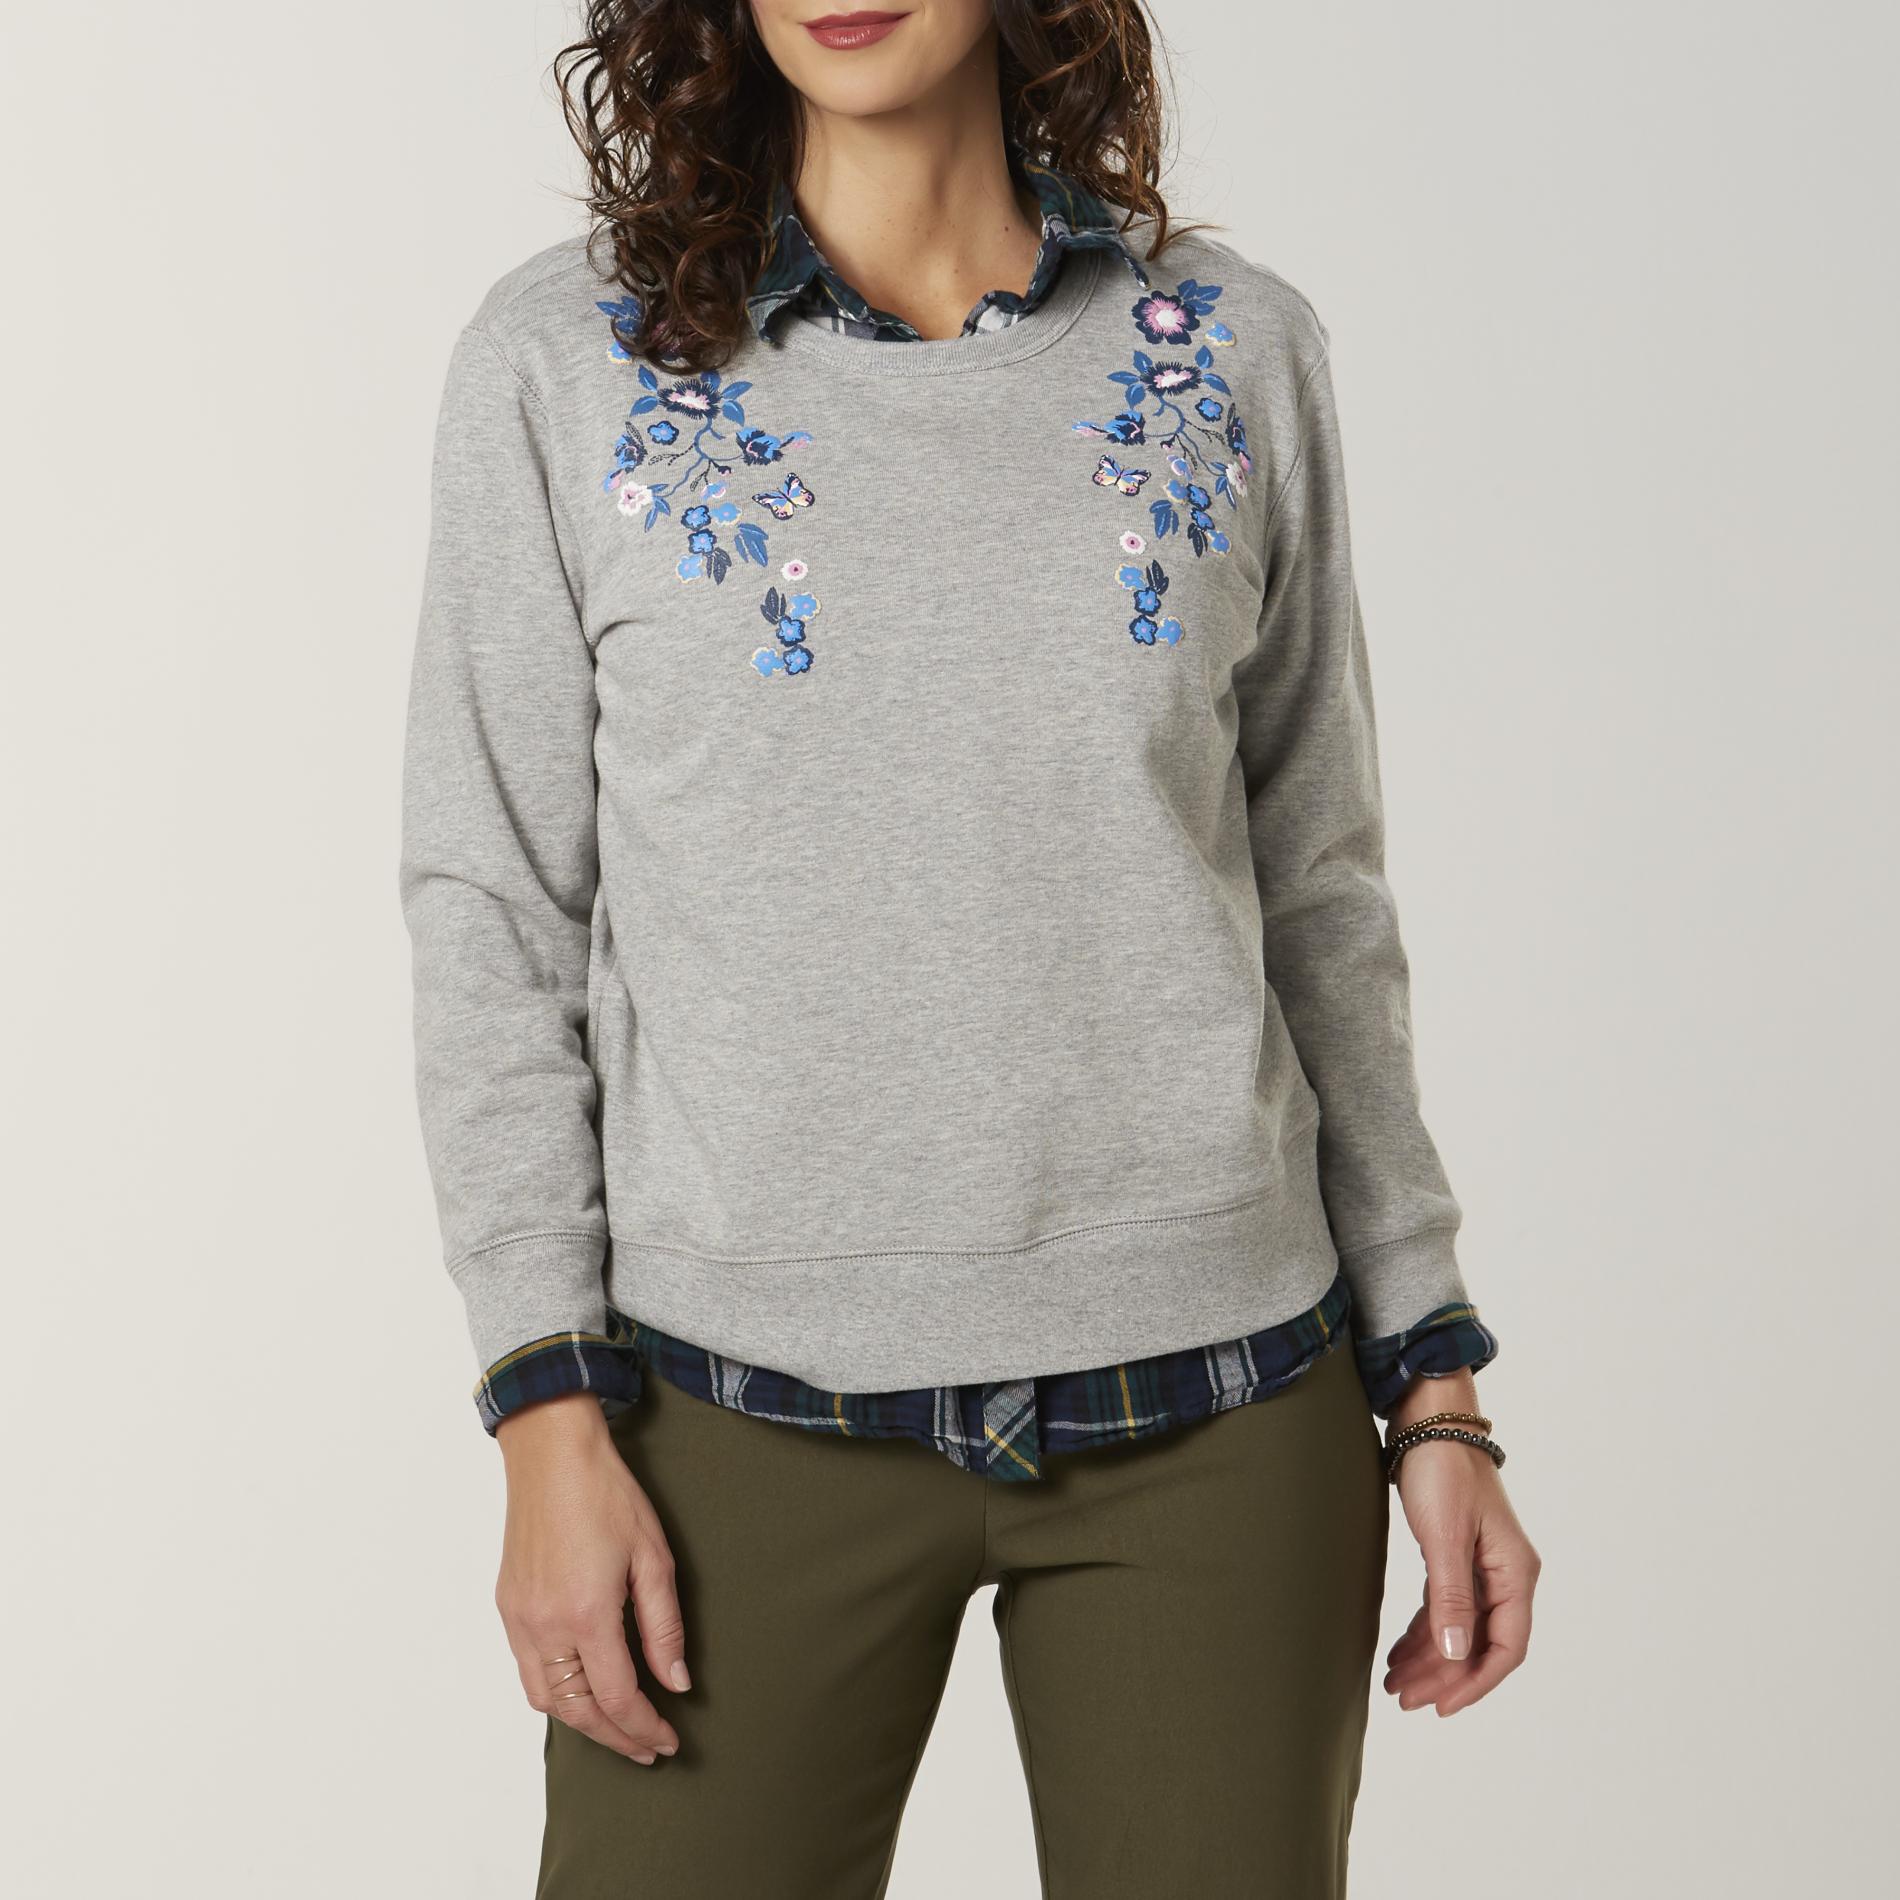 Laura Scott Women's Sweatshirt - Floral